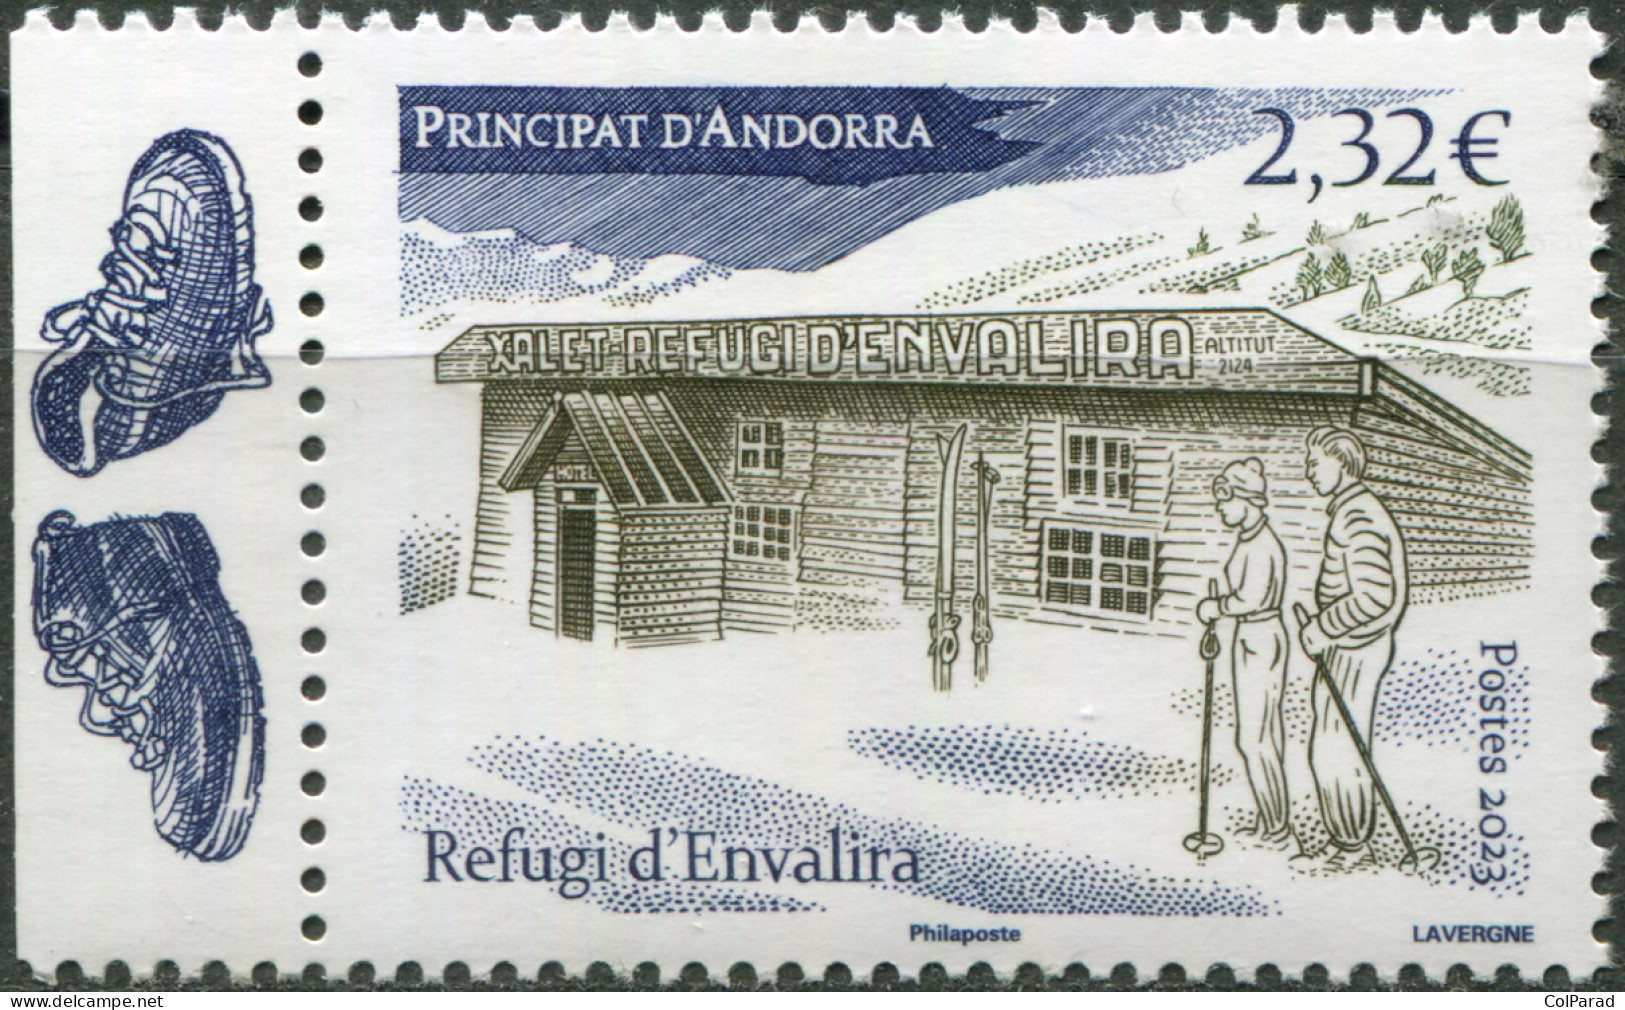 ANDORRA [FR.] - 2023 - STAMP MNH ** - Mountain Cabin, Envalira - Unused Stamps